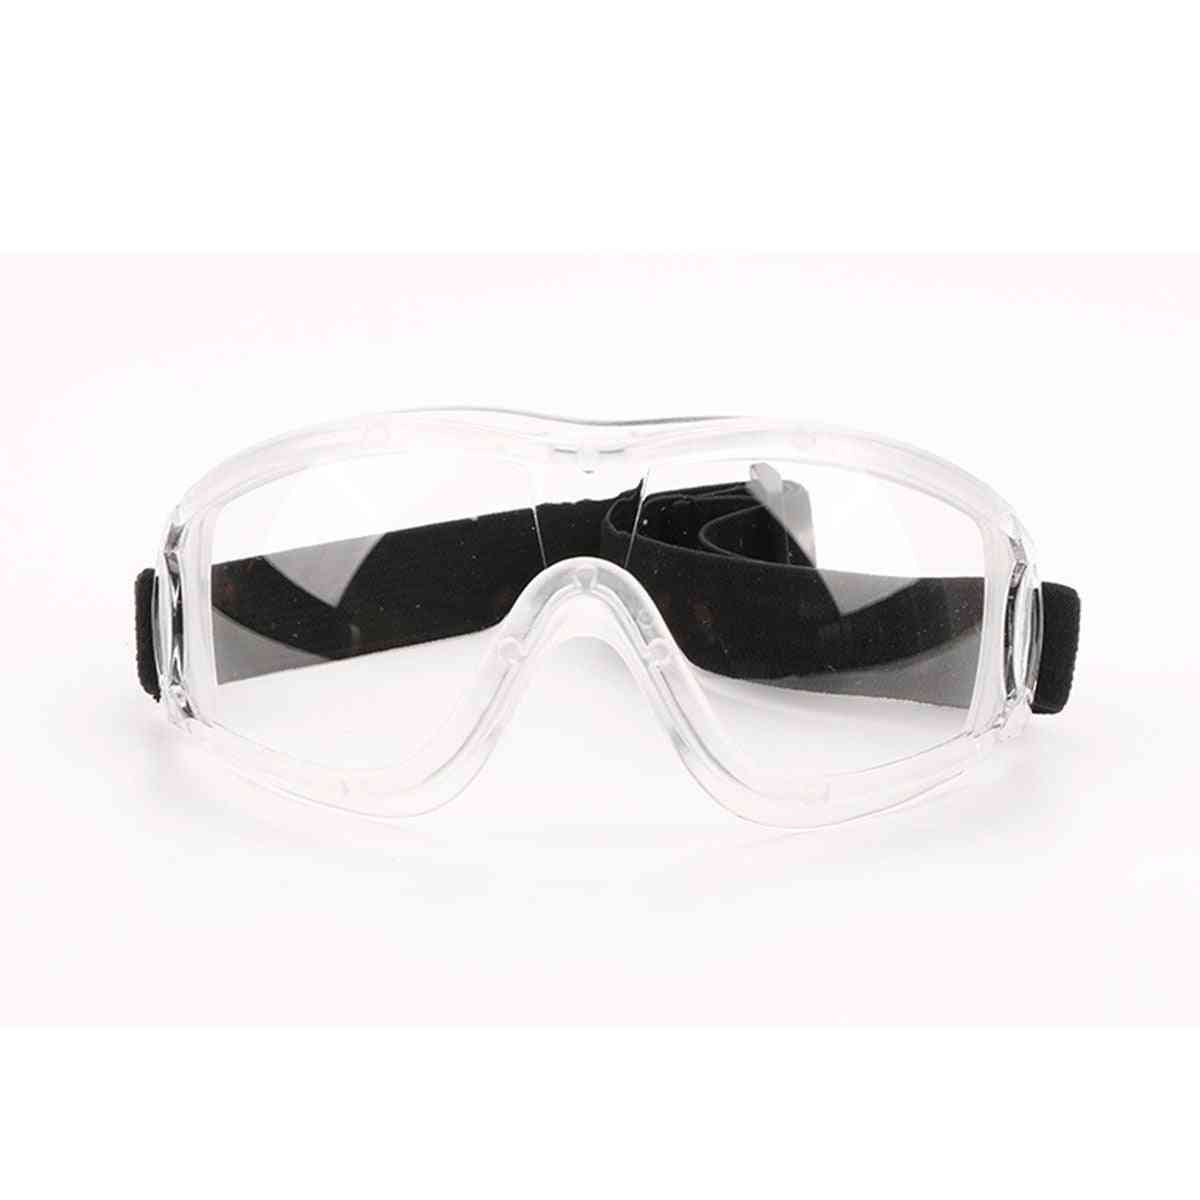 Beskyttelsesbriller, støvbeskyttelsesbriller